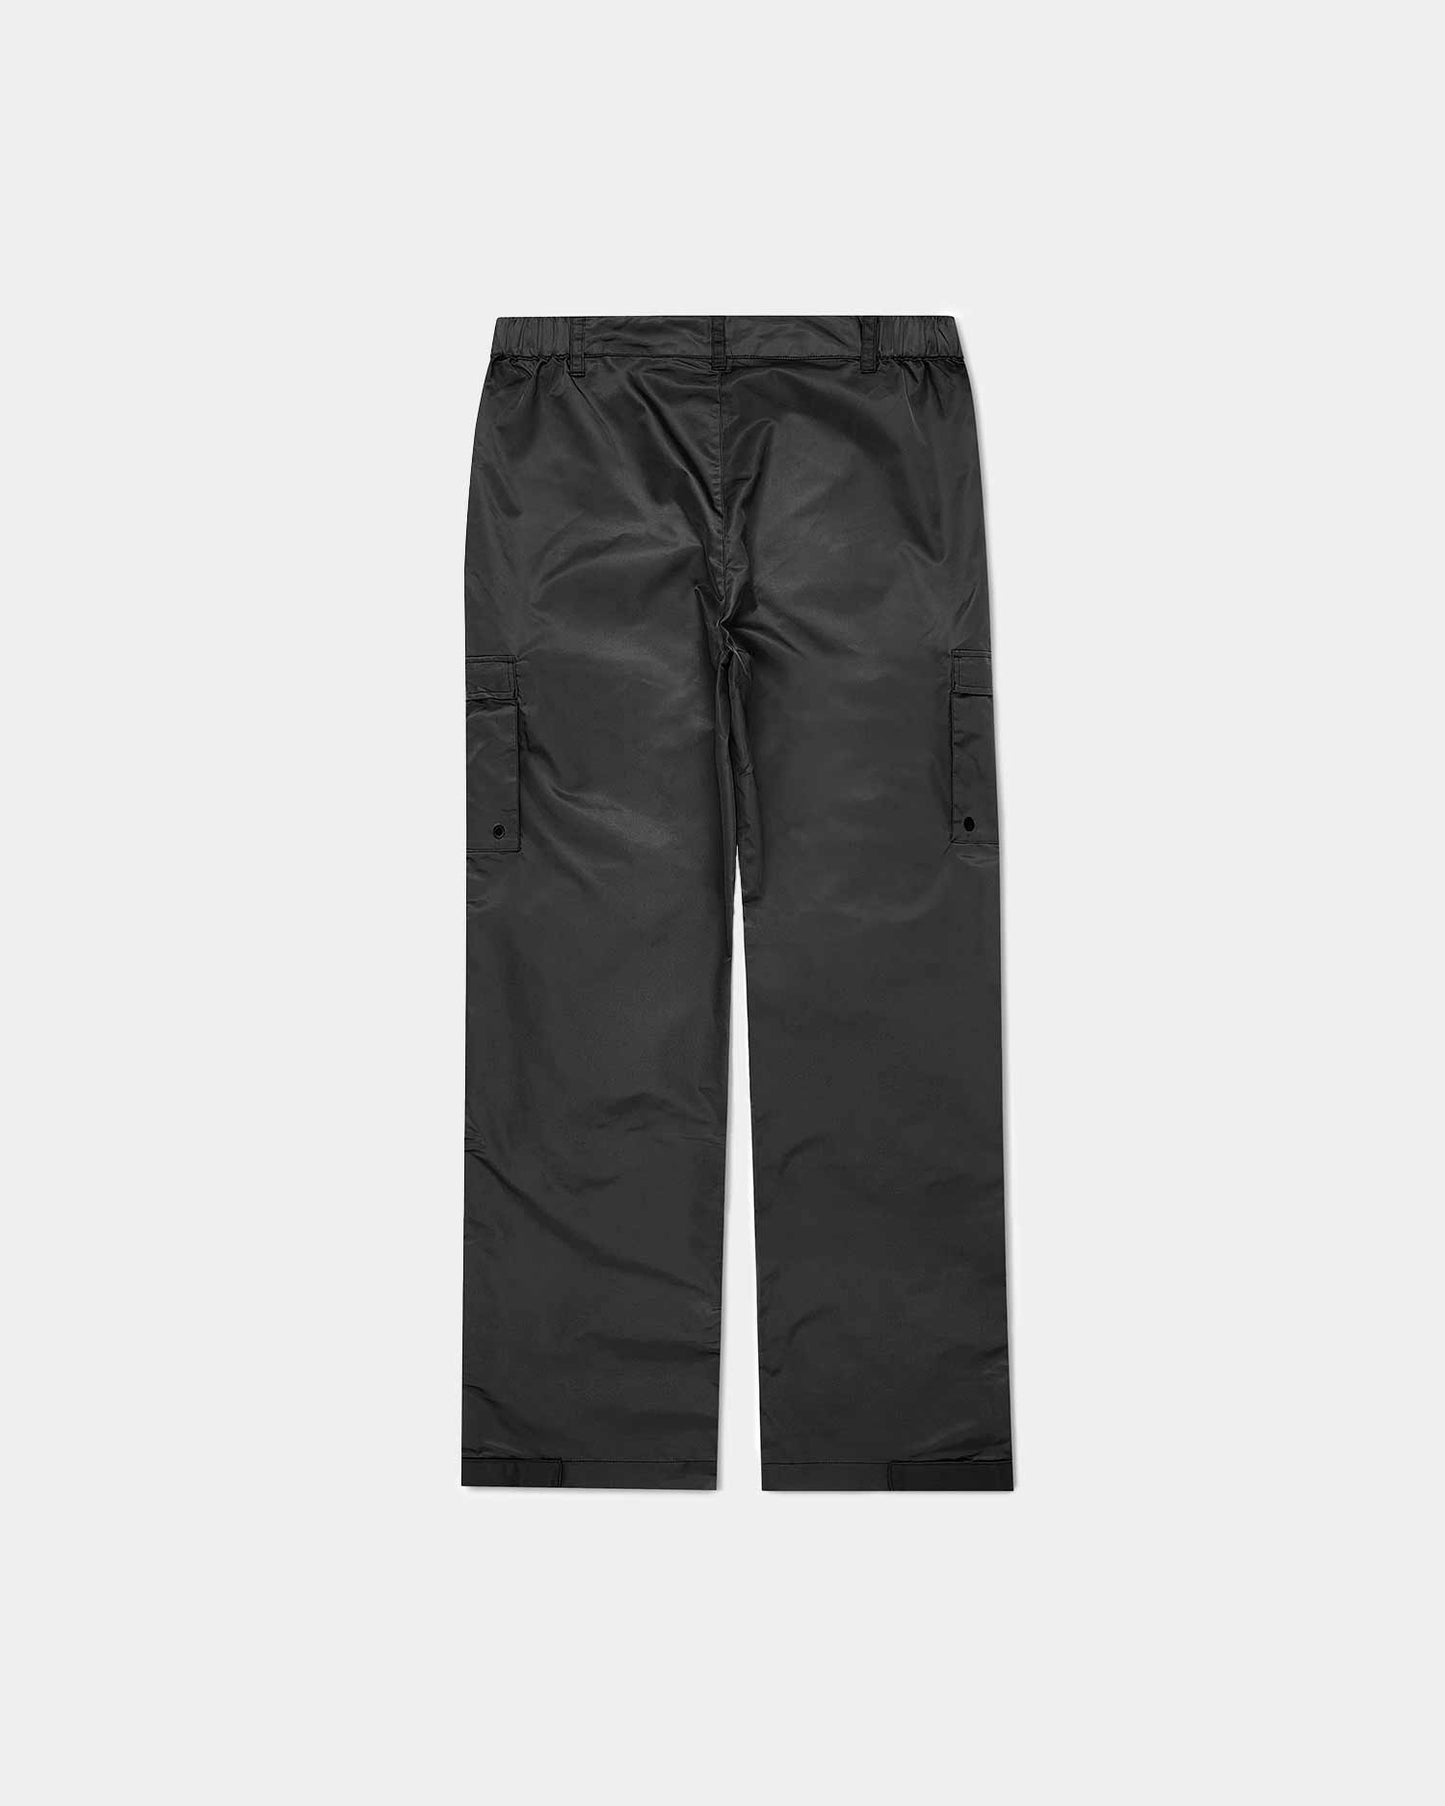 Black Nylon Tactical Pants